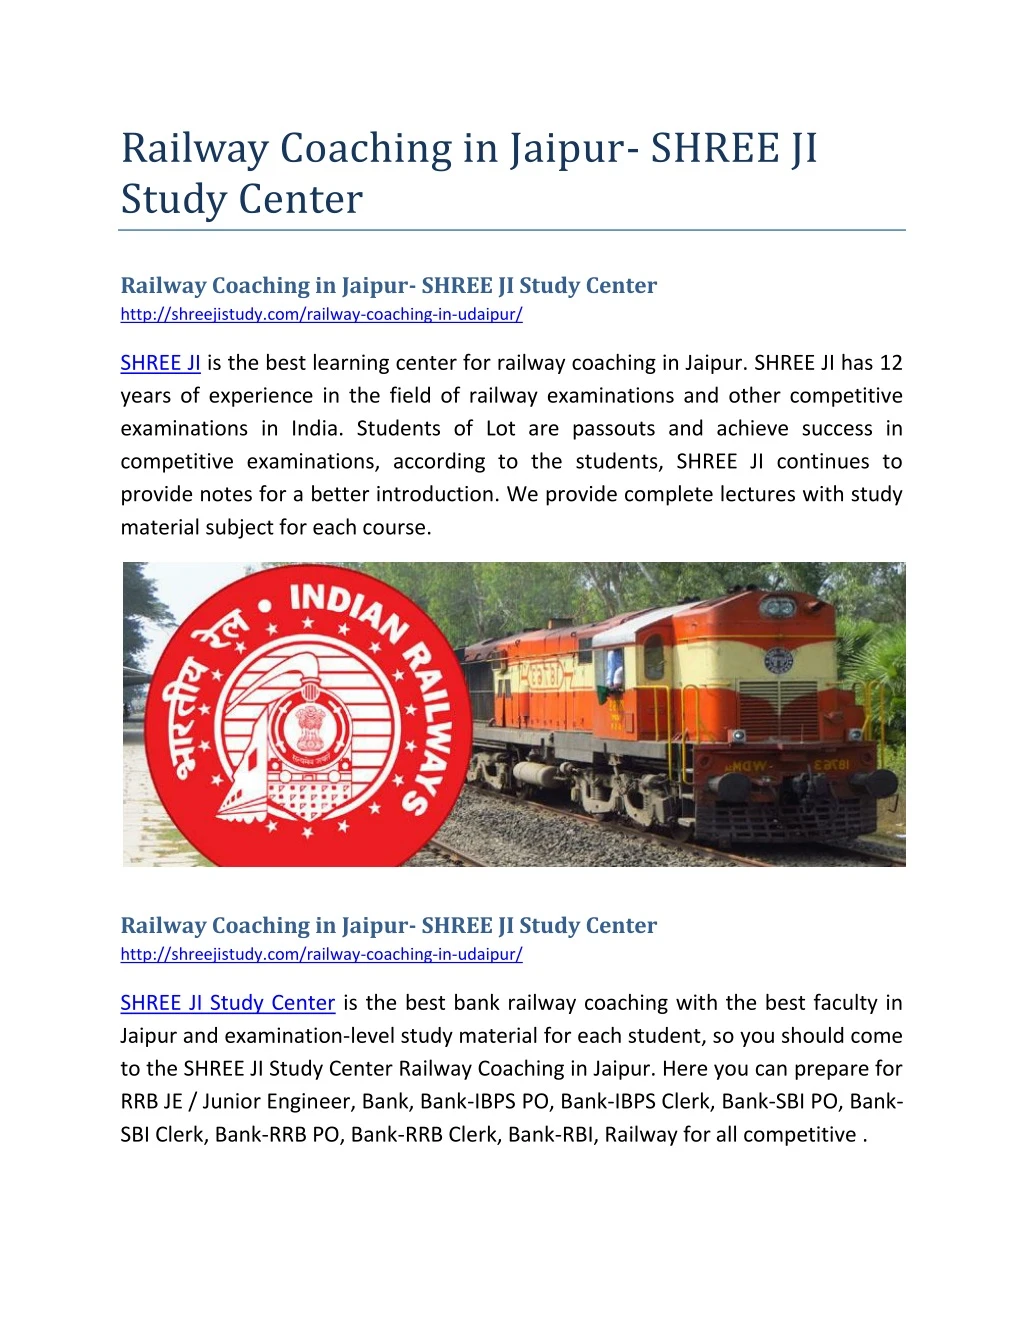 railway coaching in jaipur shree ji study center